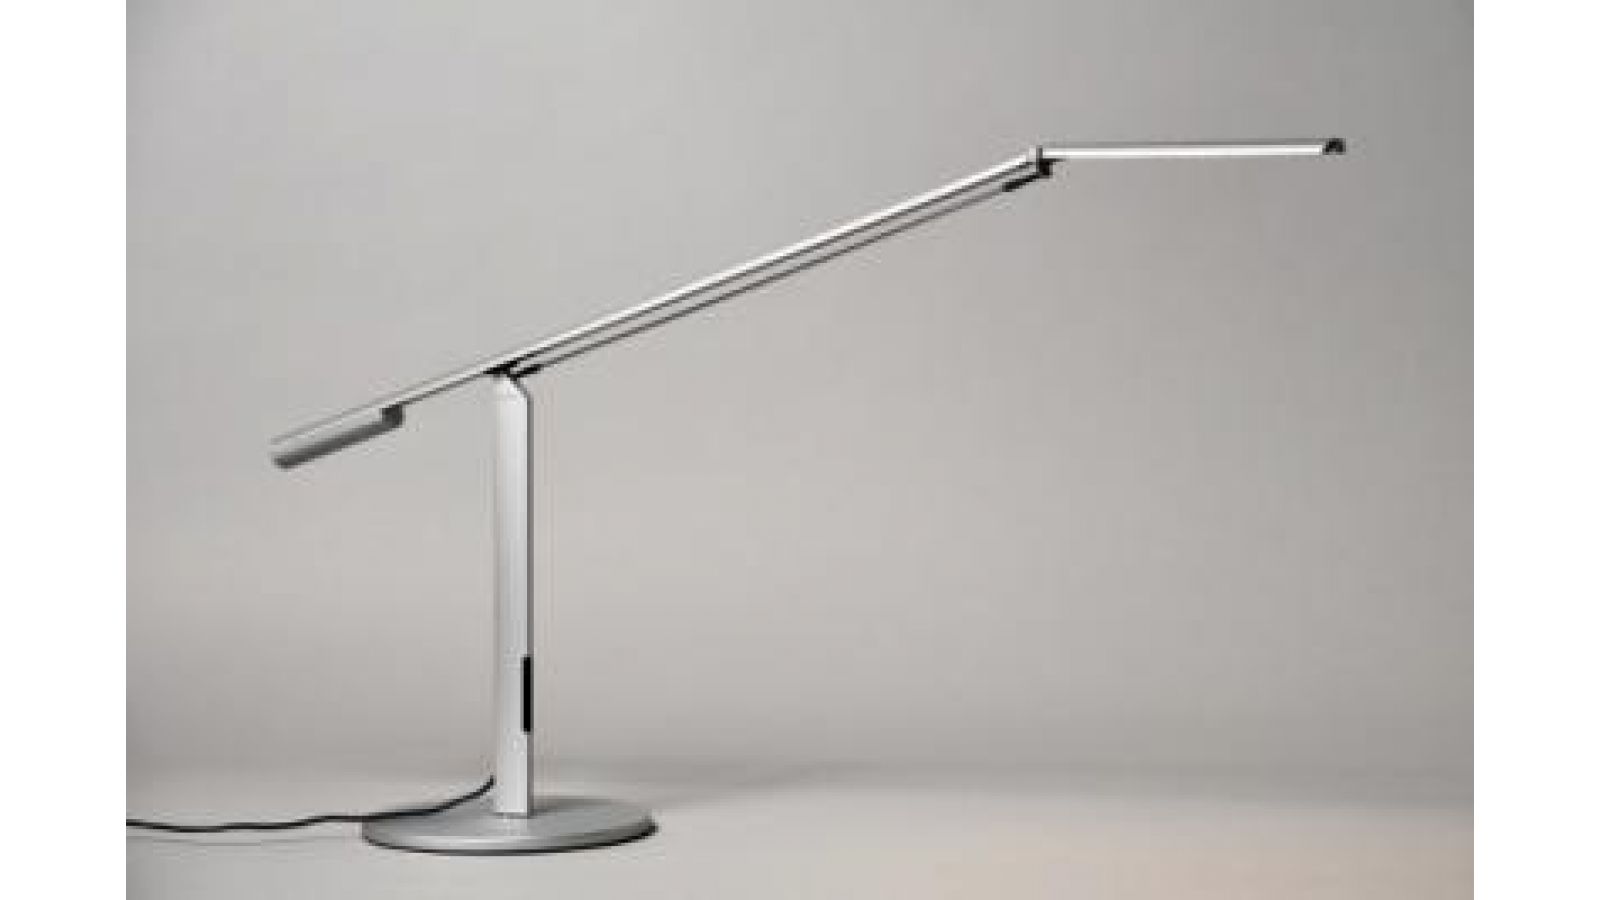 Equo LED Desk Lamp - Silver